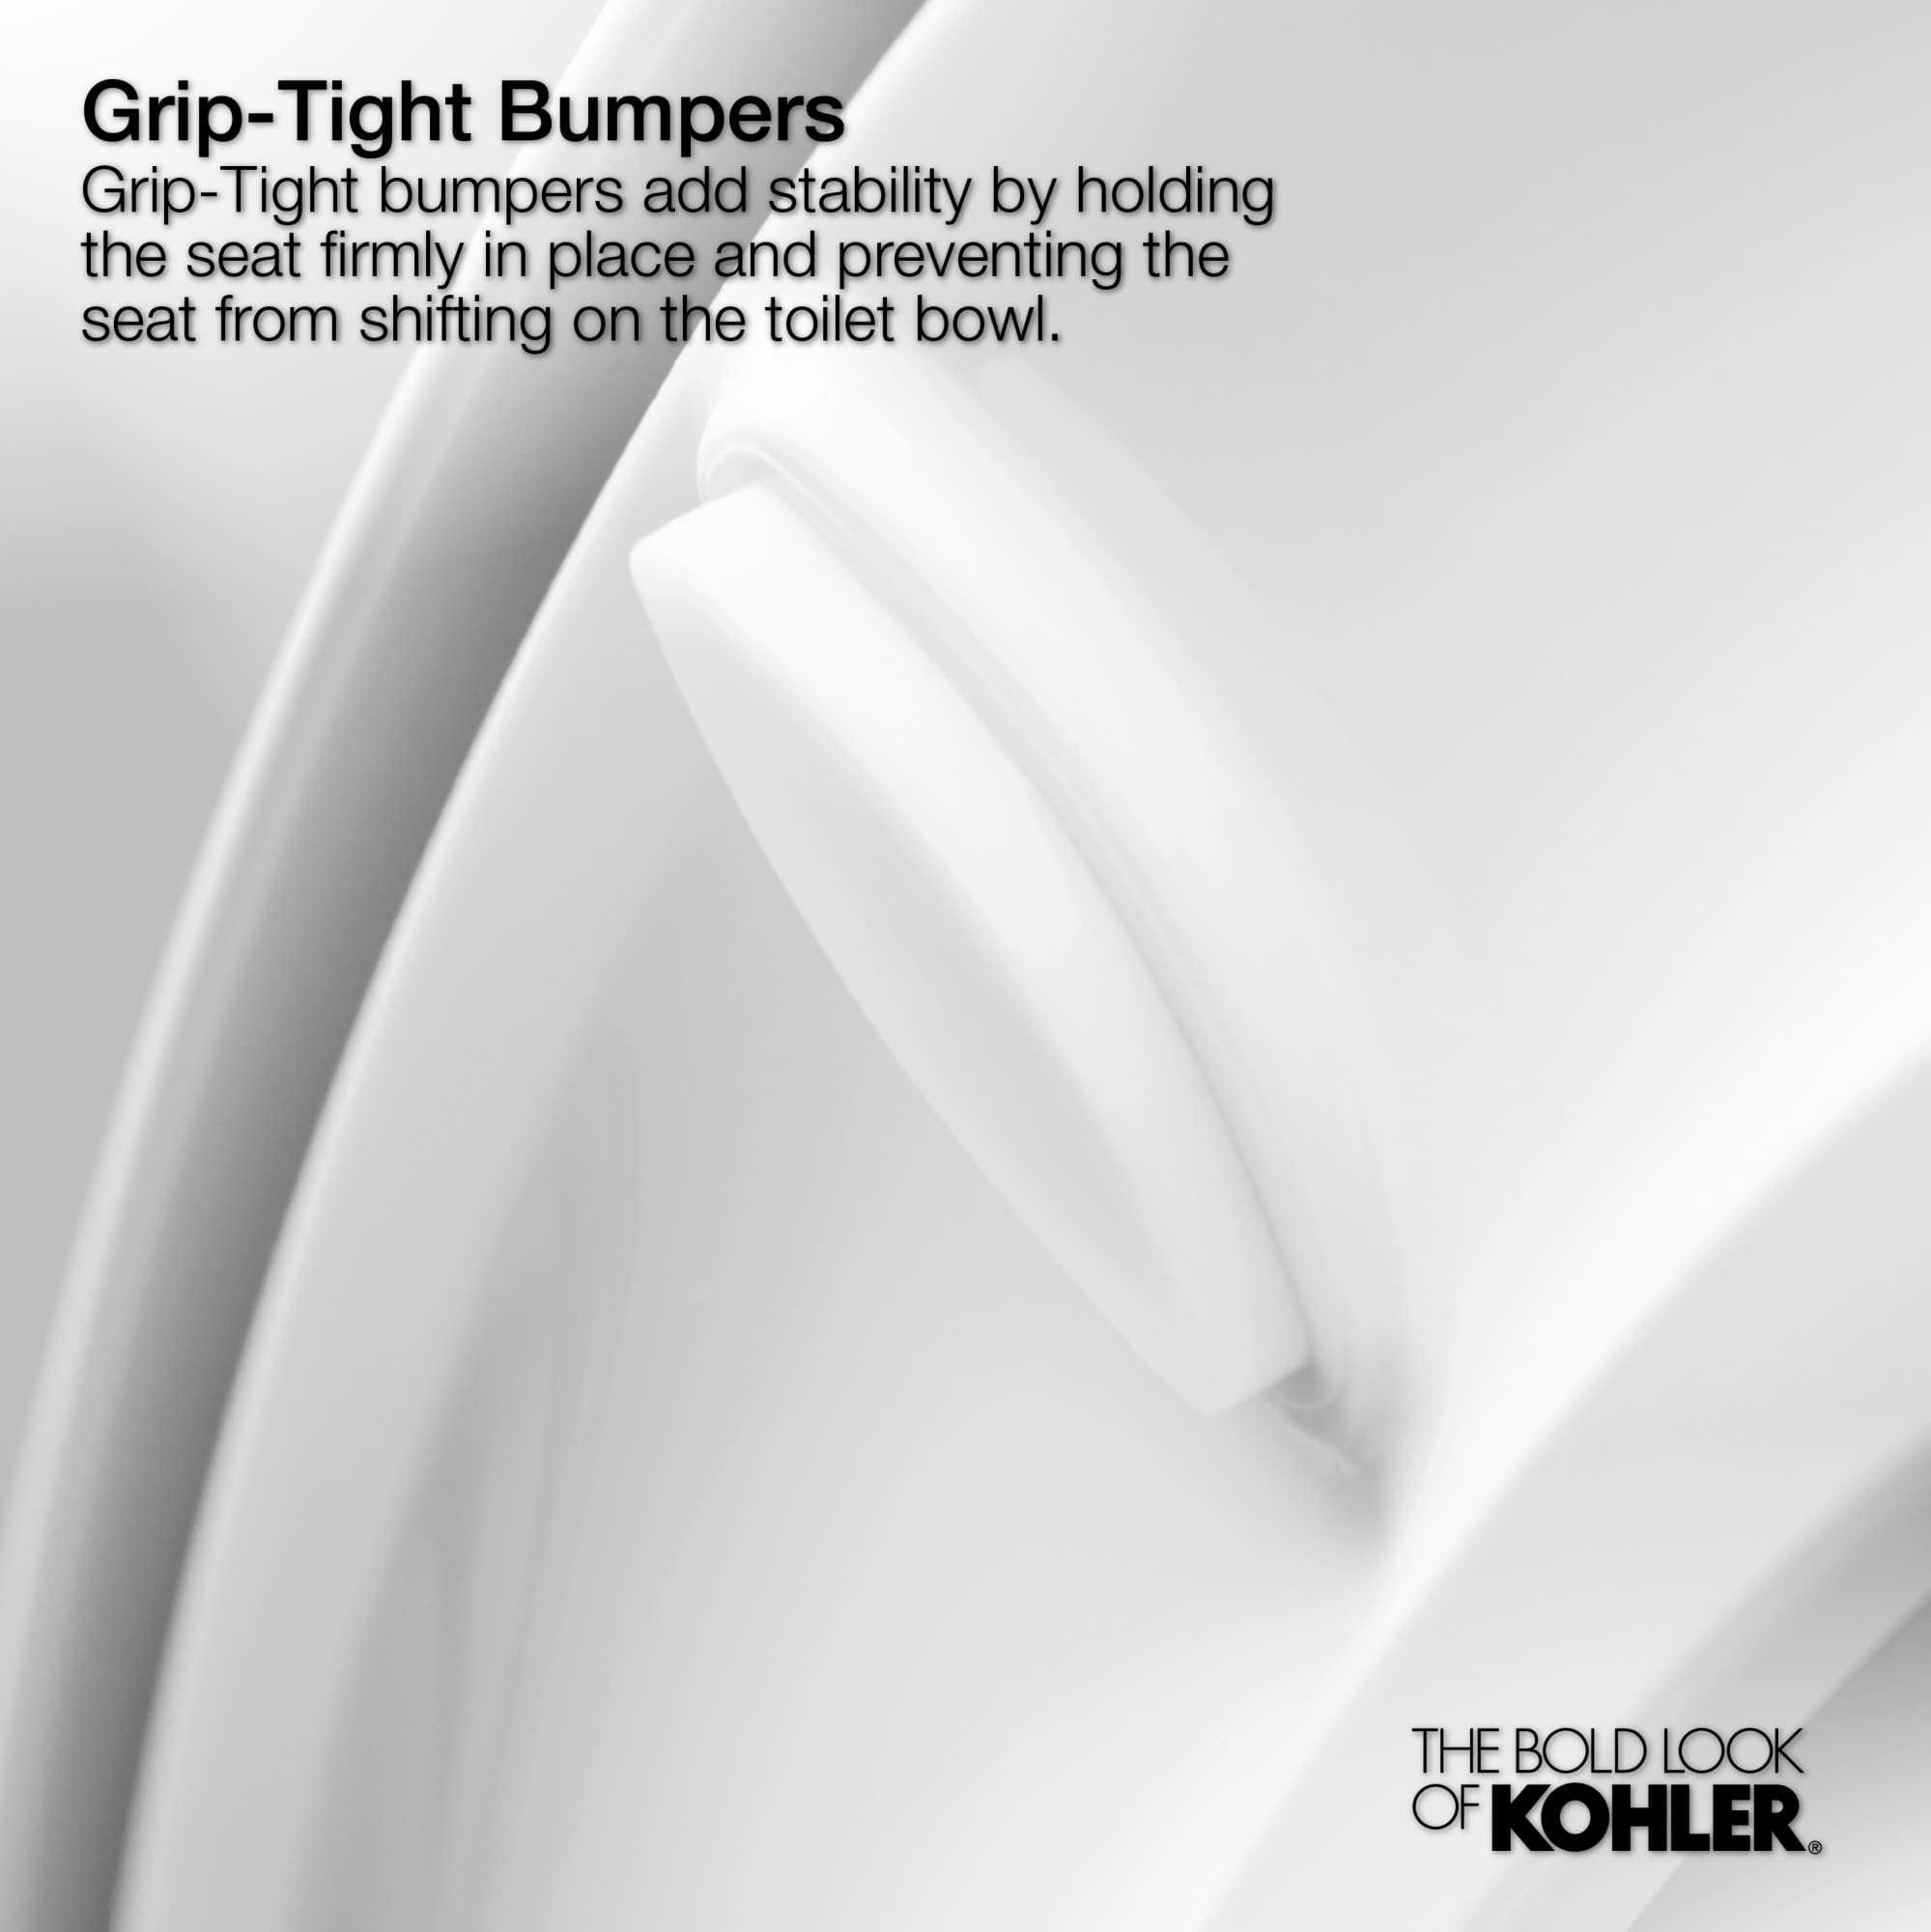 KOHLER K-4636-0 Cachet Quiet Close Toilet Seat, White, Elongated